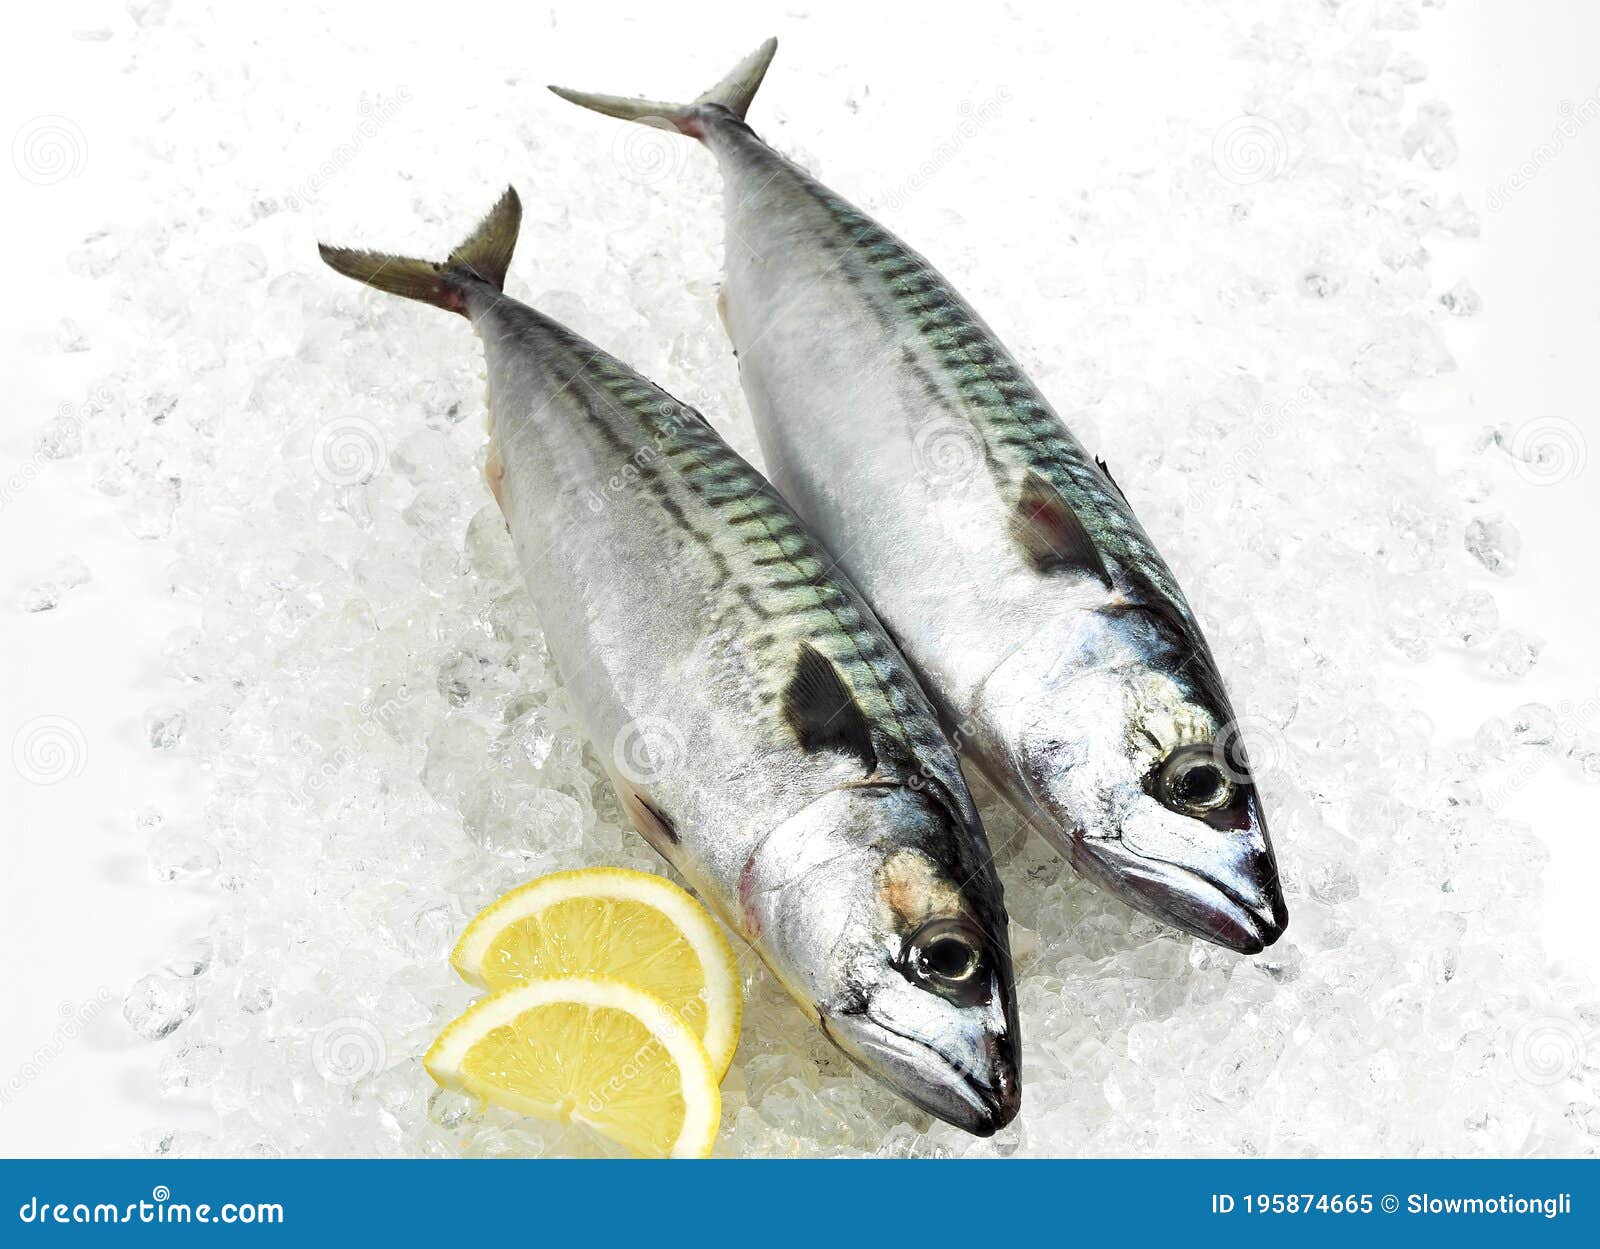 mackerel, scomber scombrus, fresh fish with lemon on ice